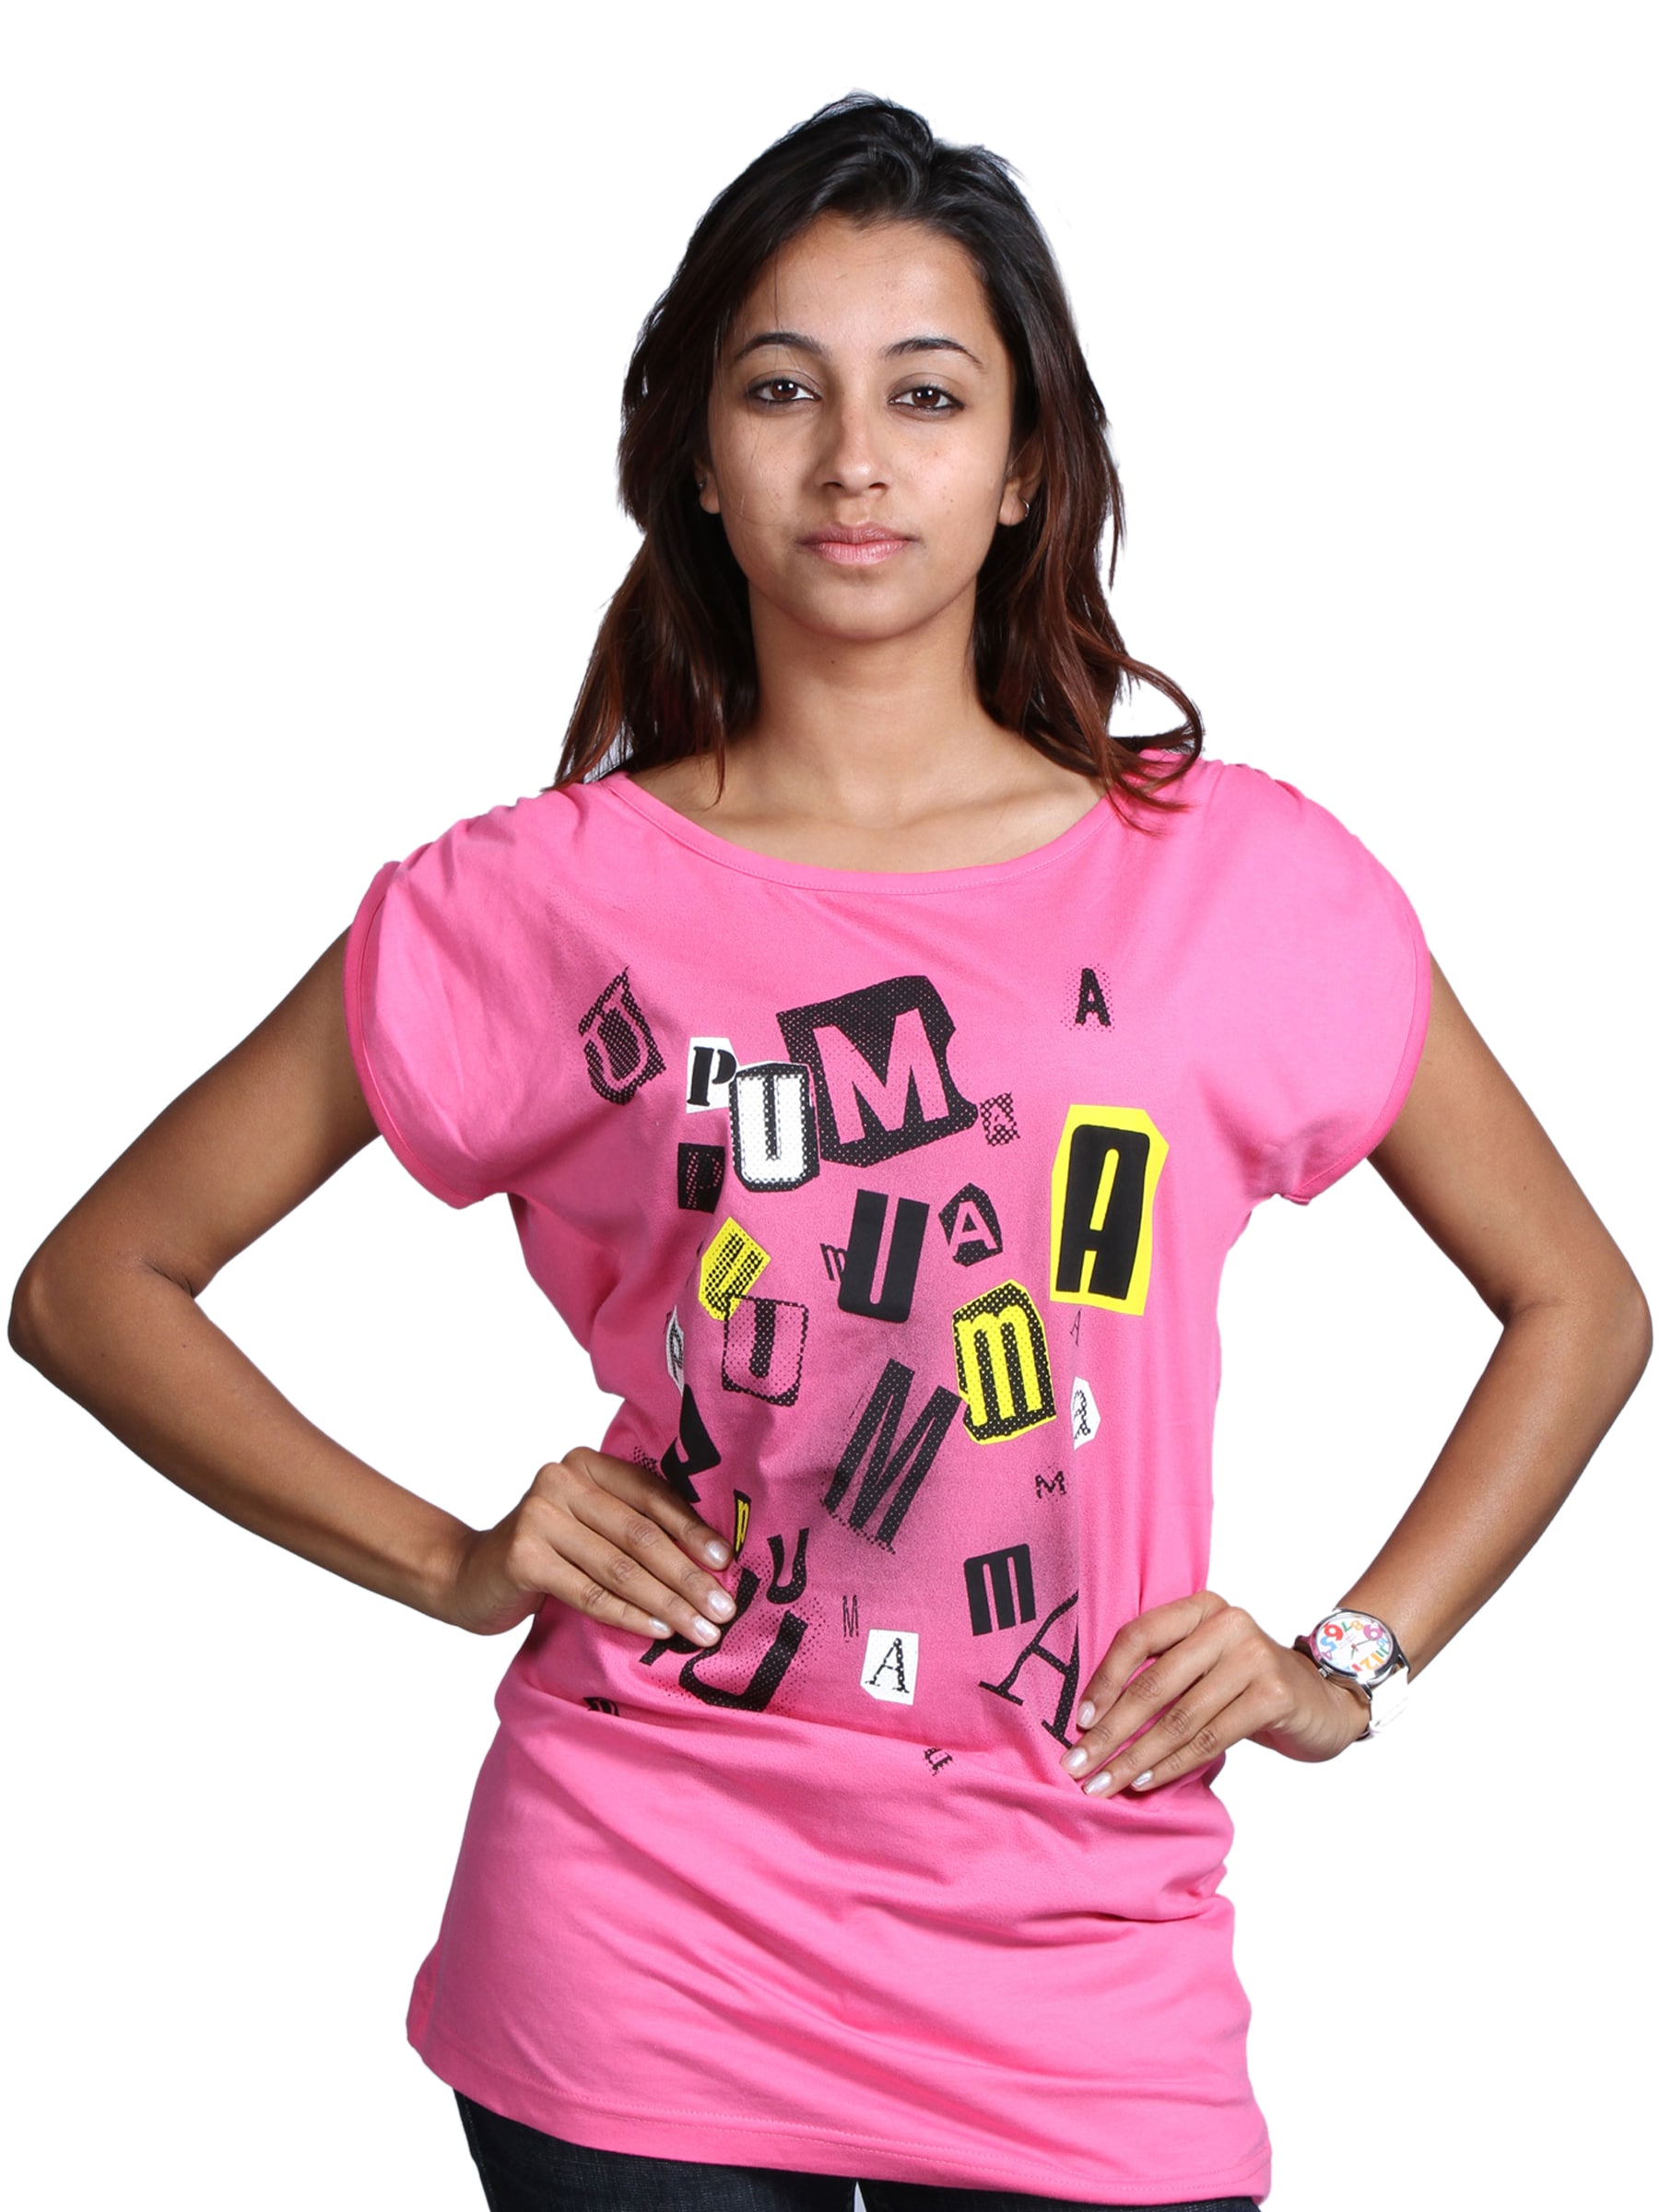 Puma Women's Punk Graphic Pink T-shirt